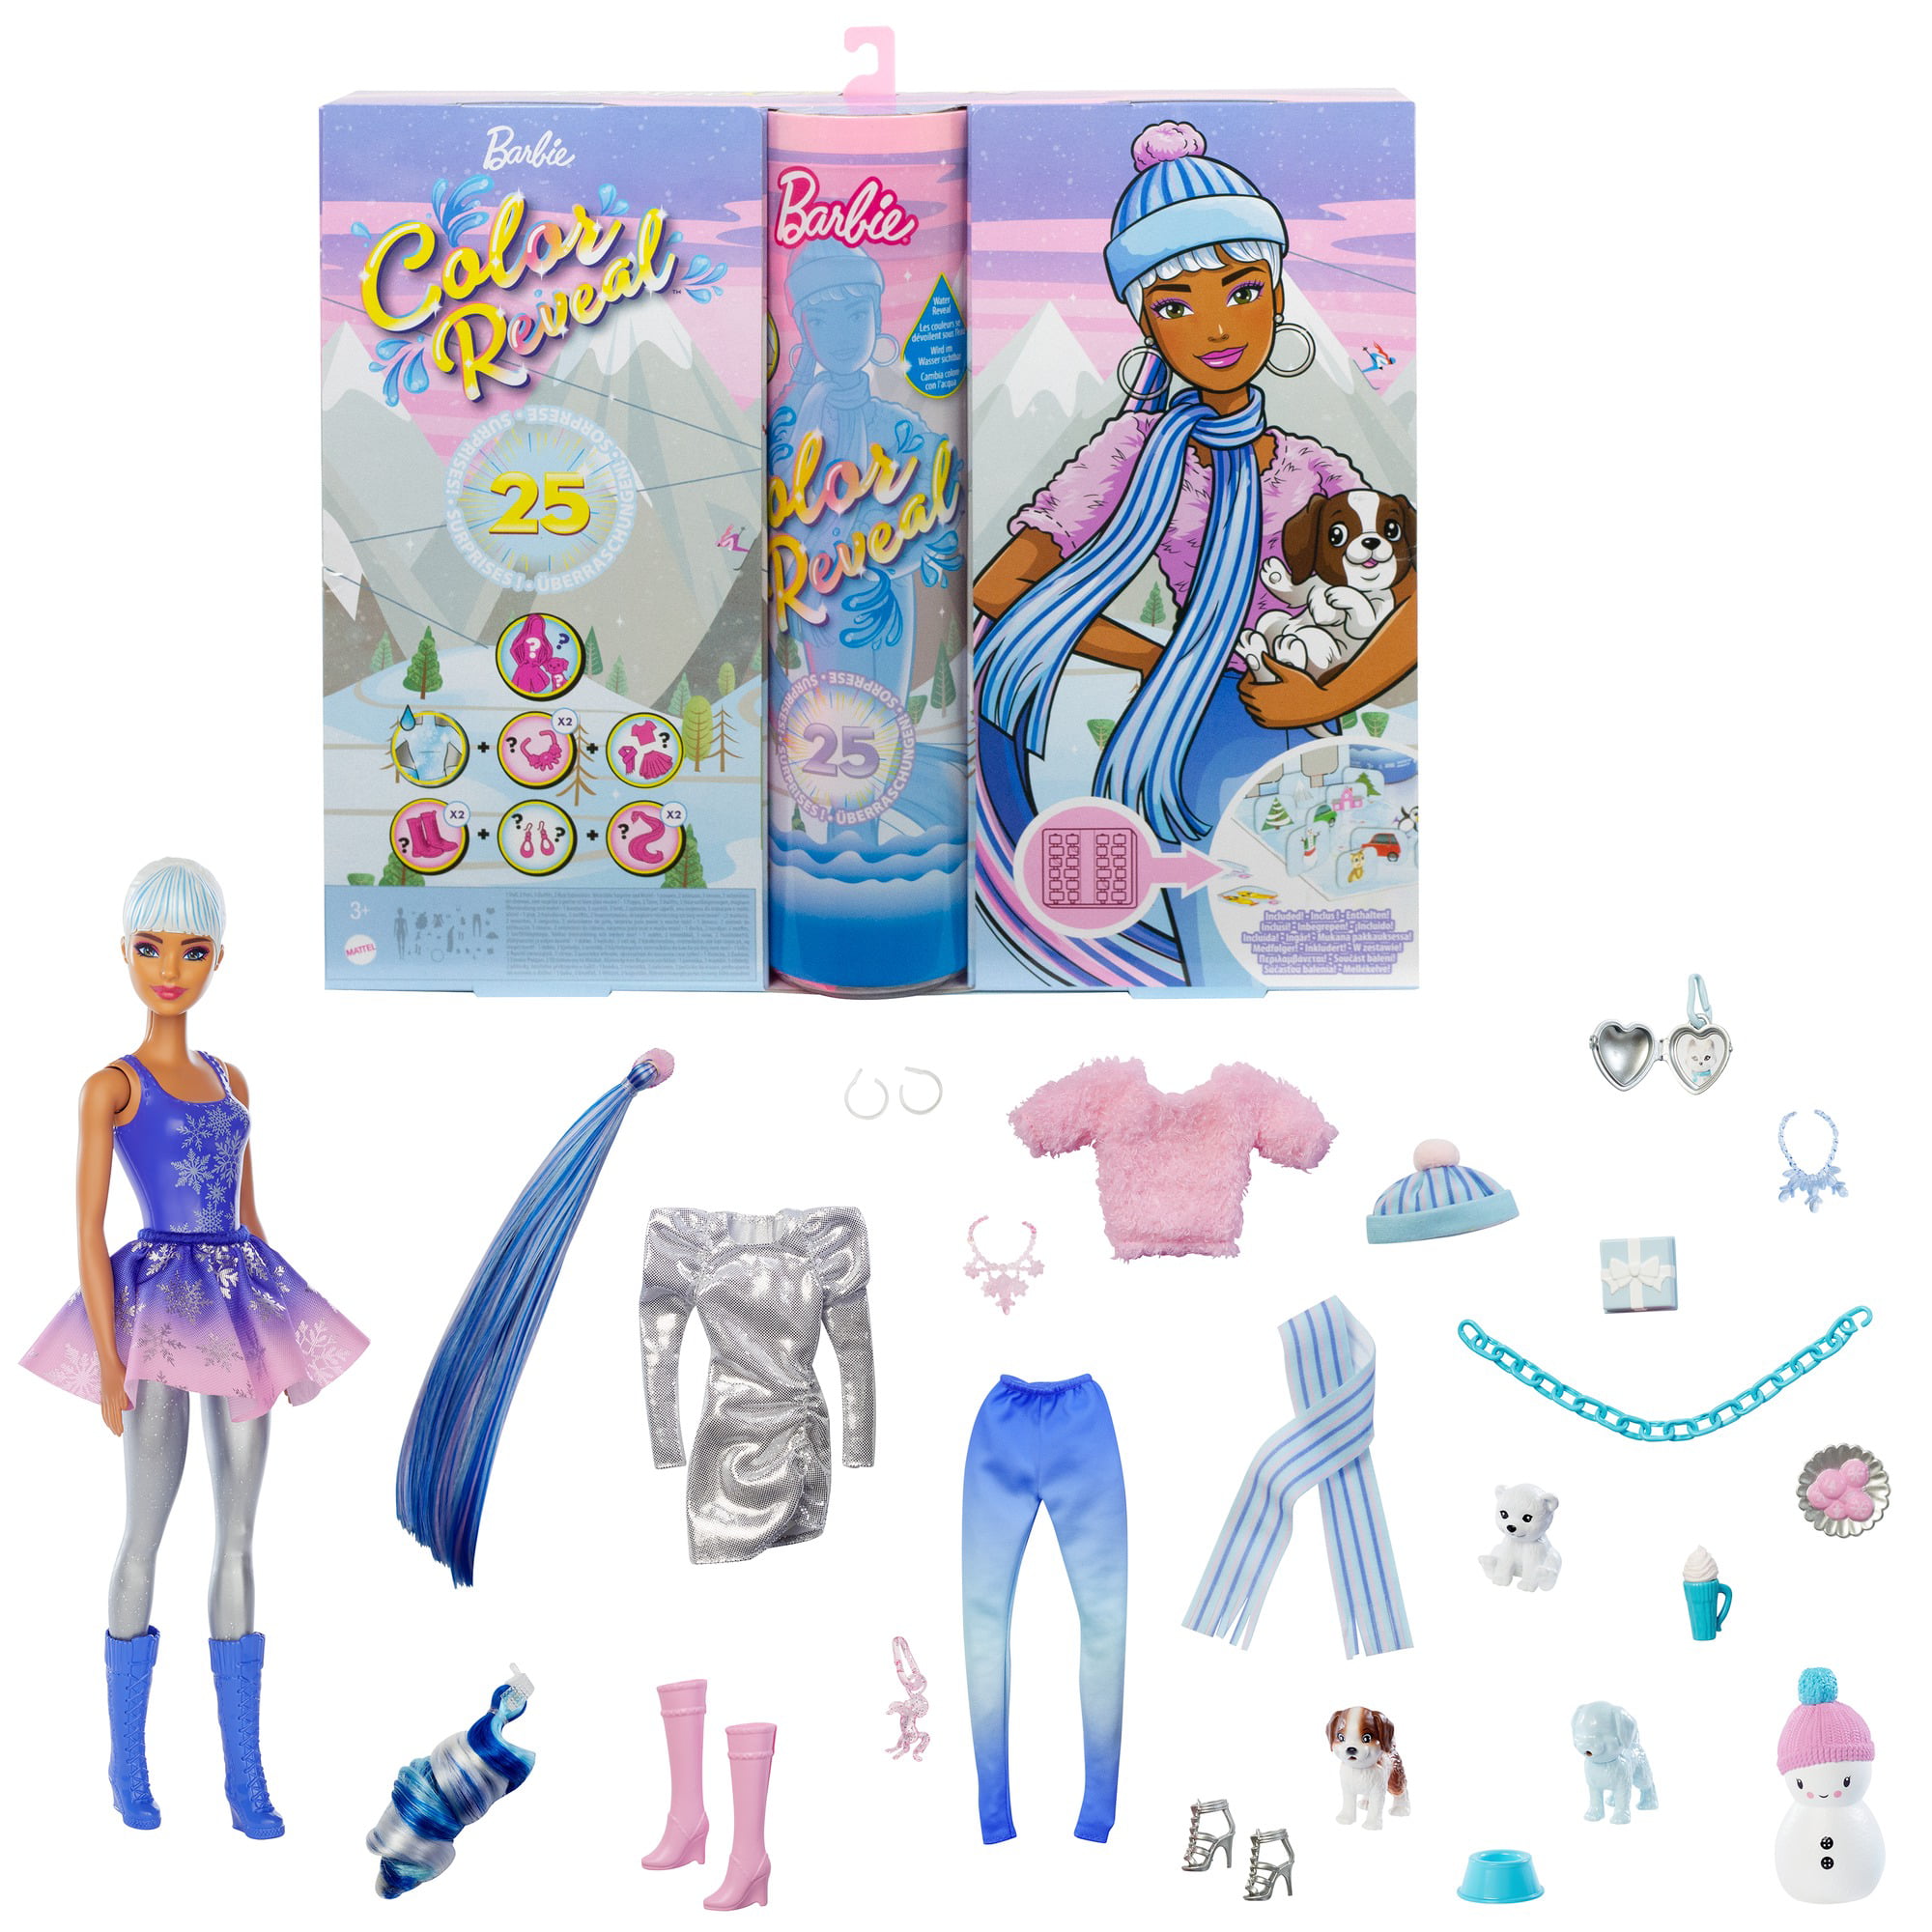 Barbie Color Reveal Calendar With 25 Surprises Including 1 Doll & 1 Pet - Walmart.com